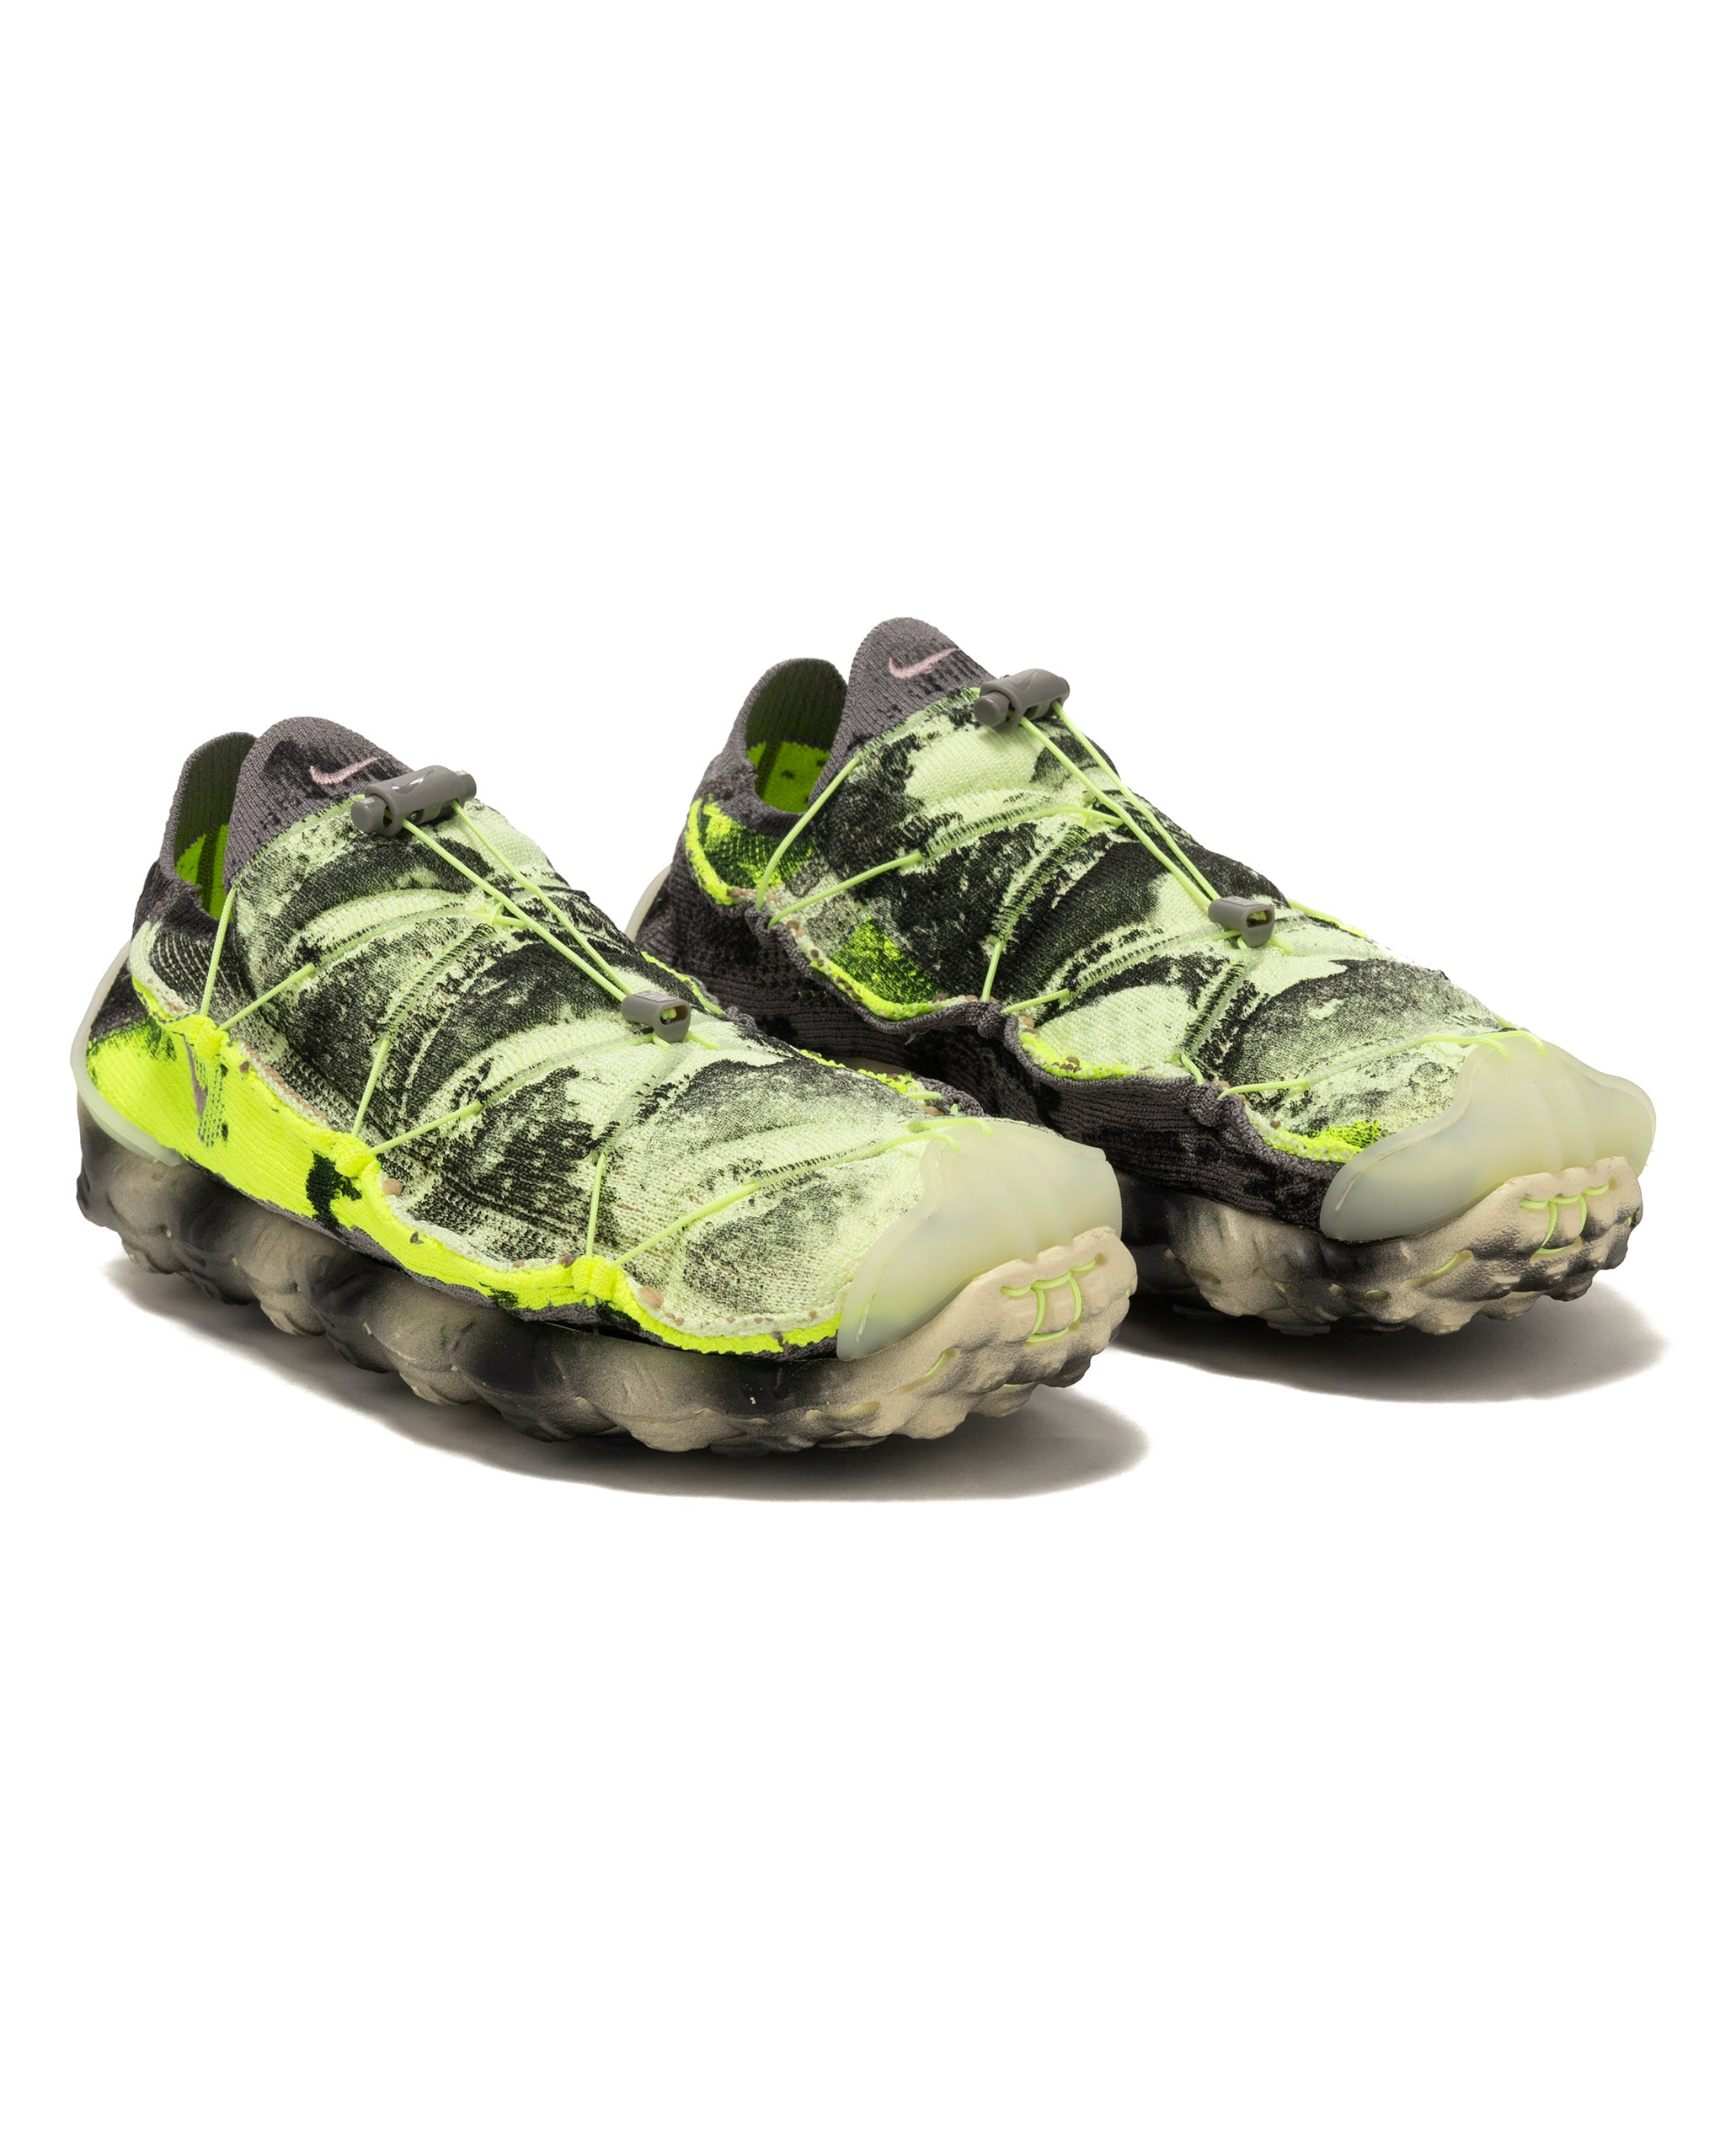 Sneakers Release – Nike Dunk Low Retro “Midas Gold/Tough Red/White”  Men’s Shoe Launching 2/18